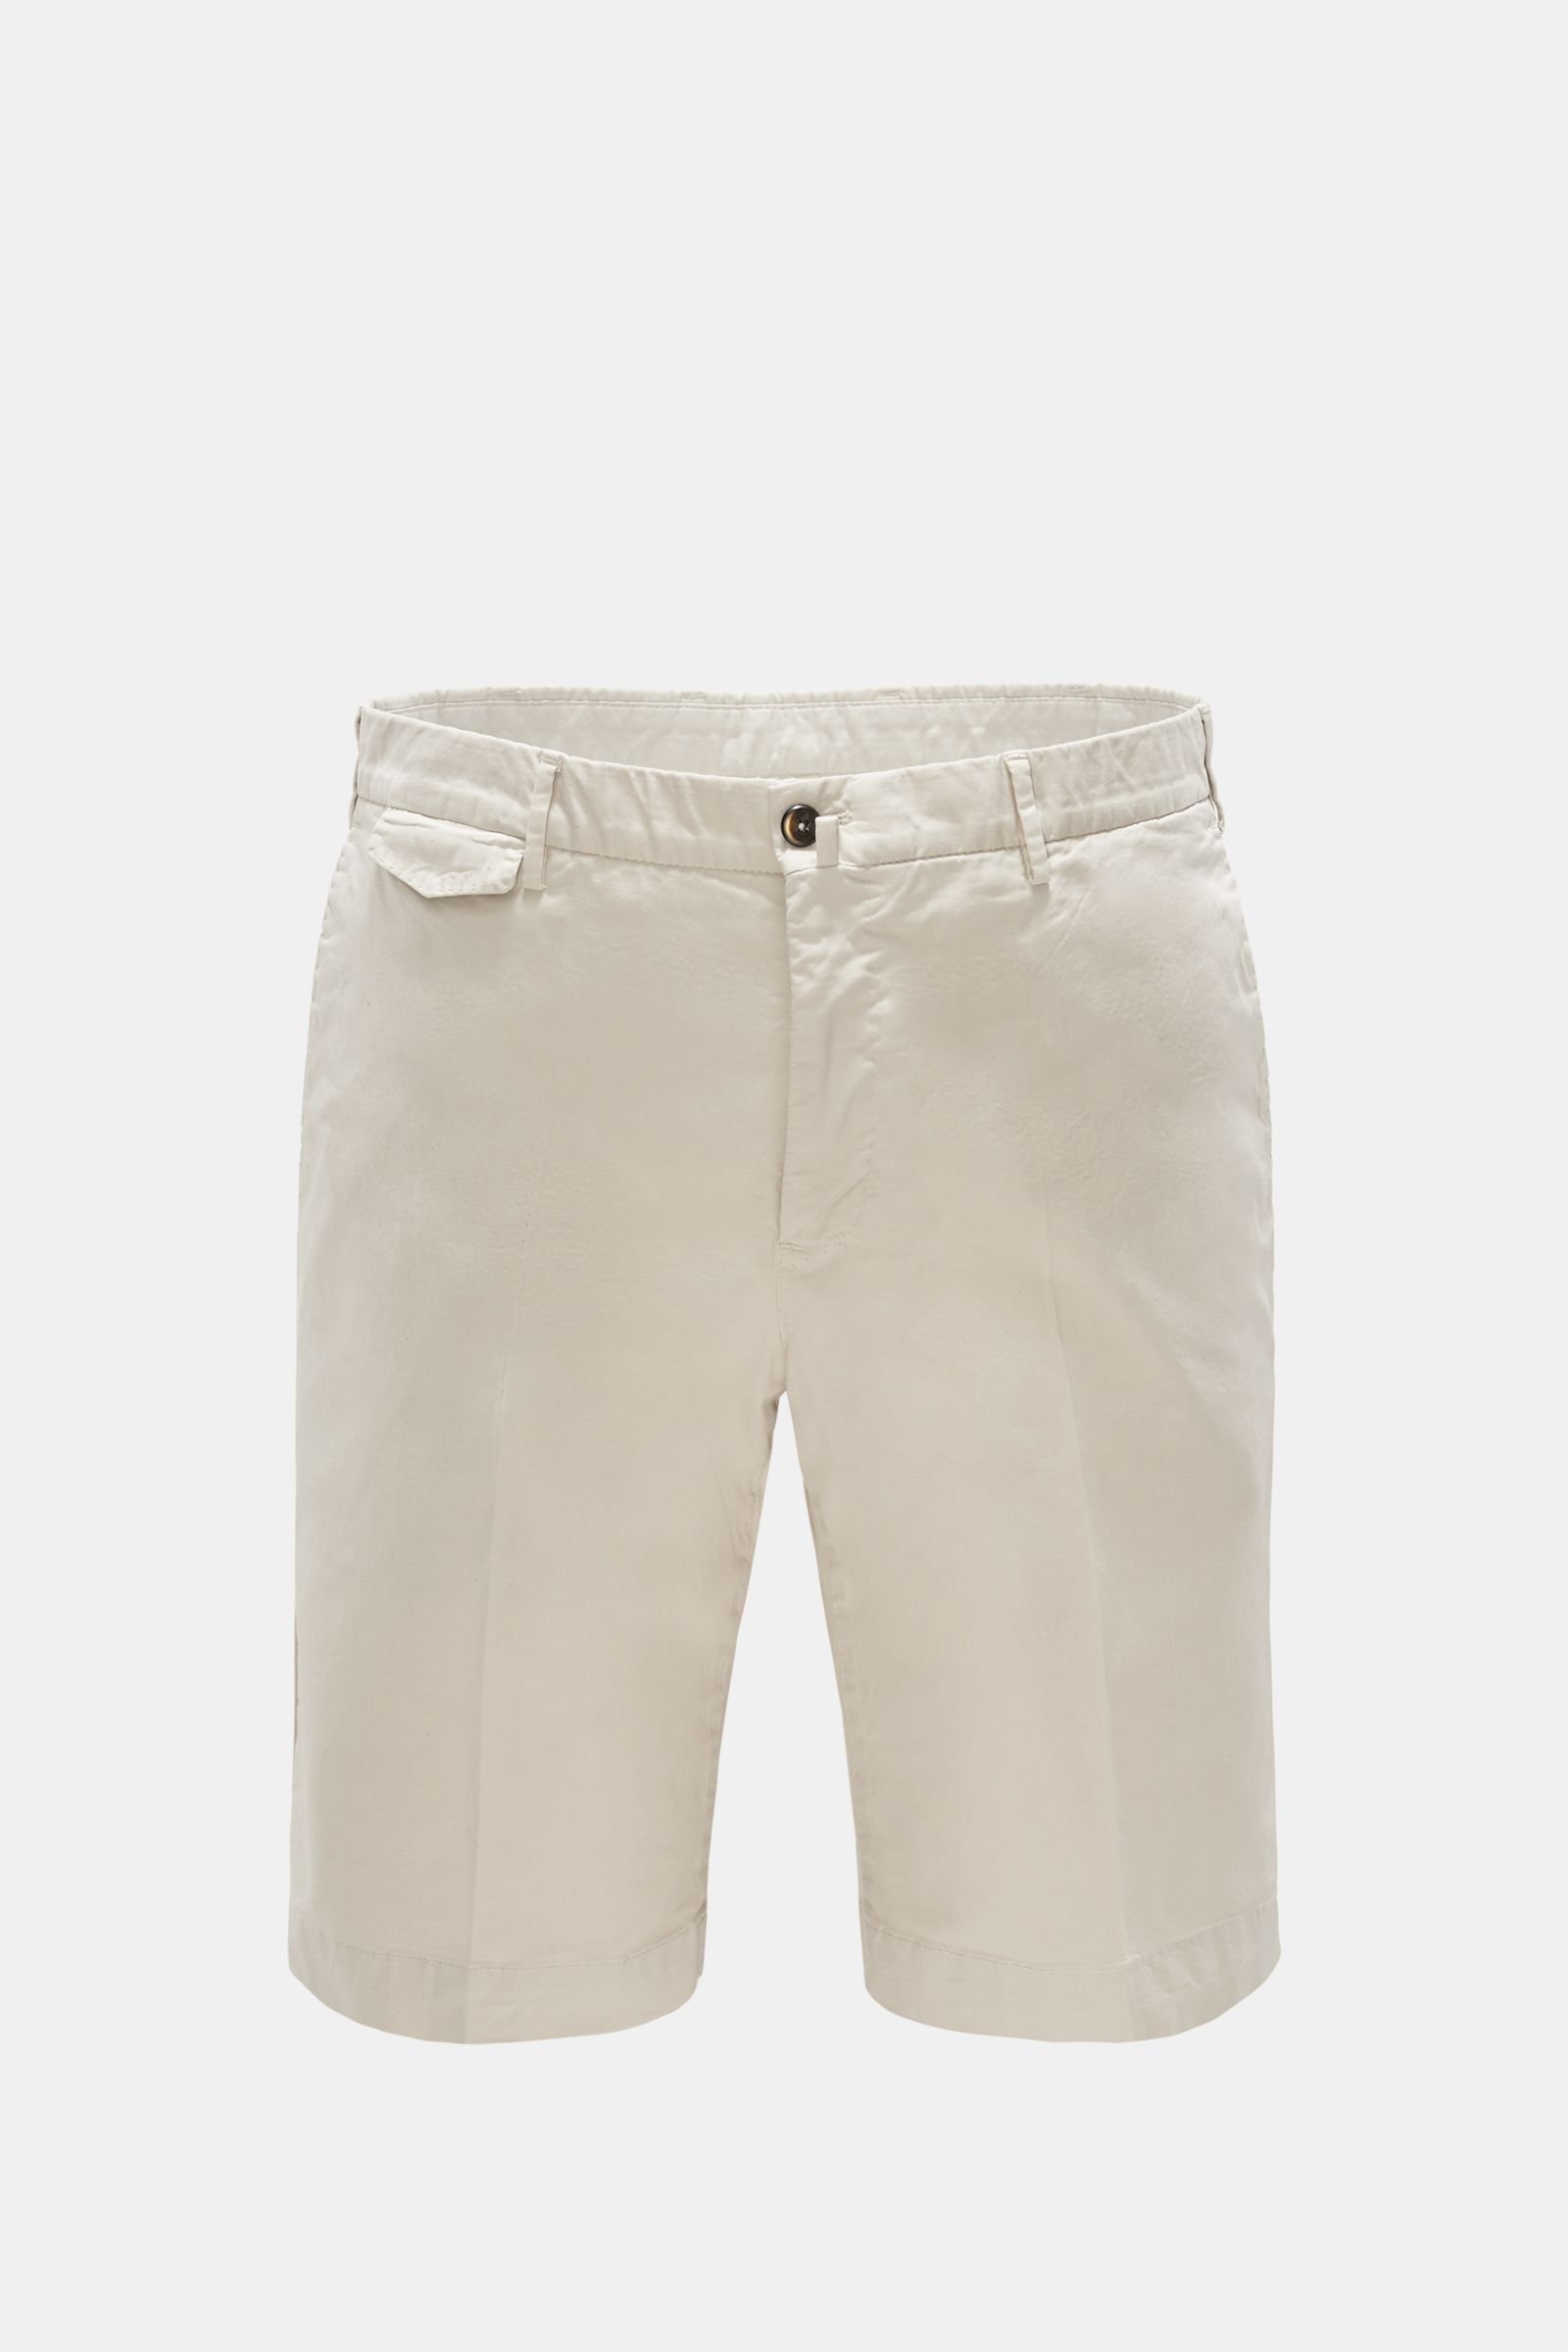 Bermuda shorts beige